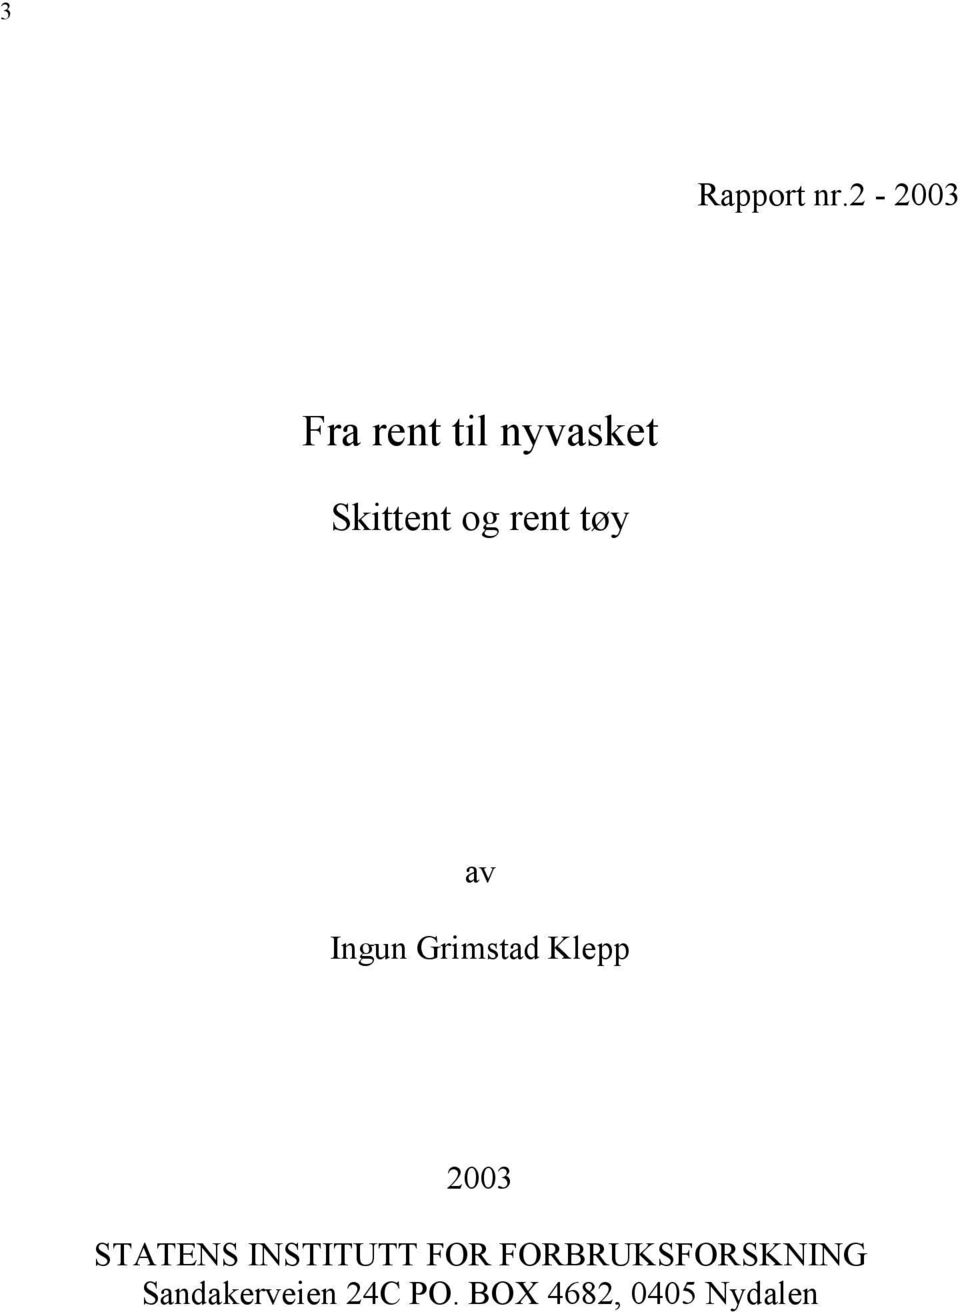 rent tøy av Ingun Grimstad Klepp 2003